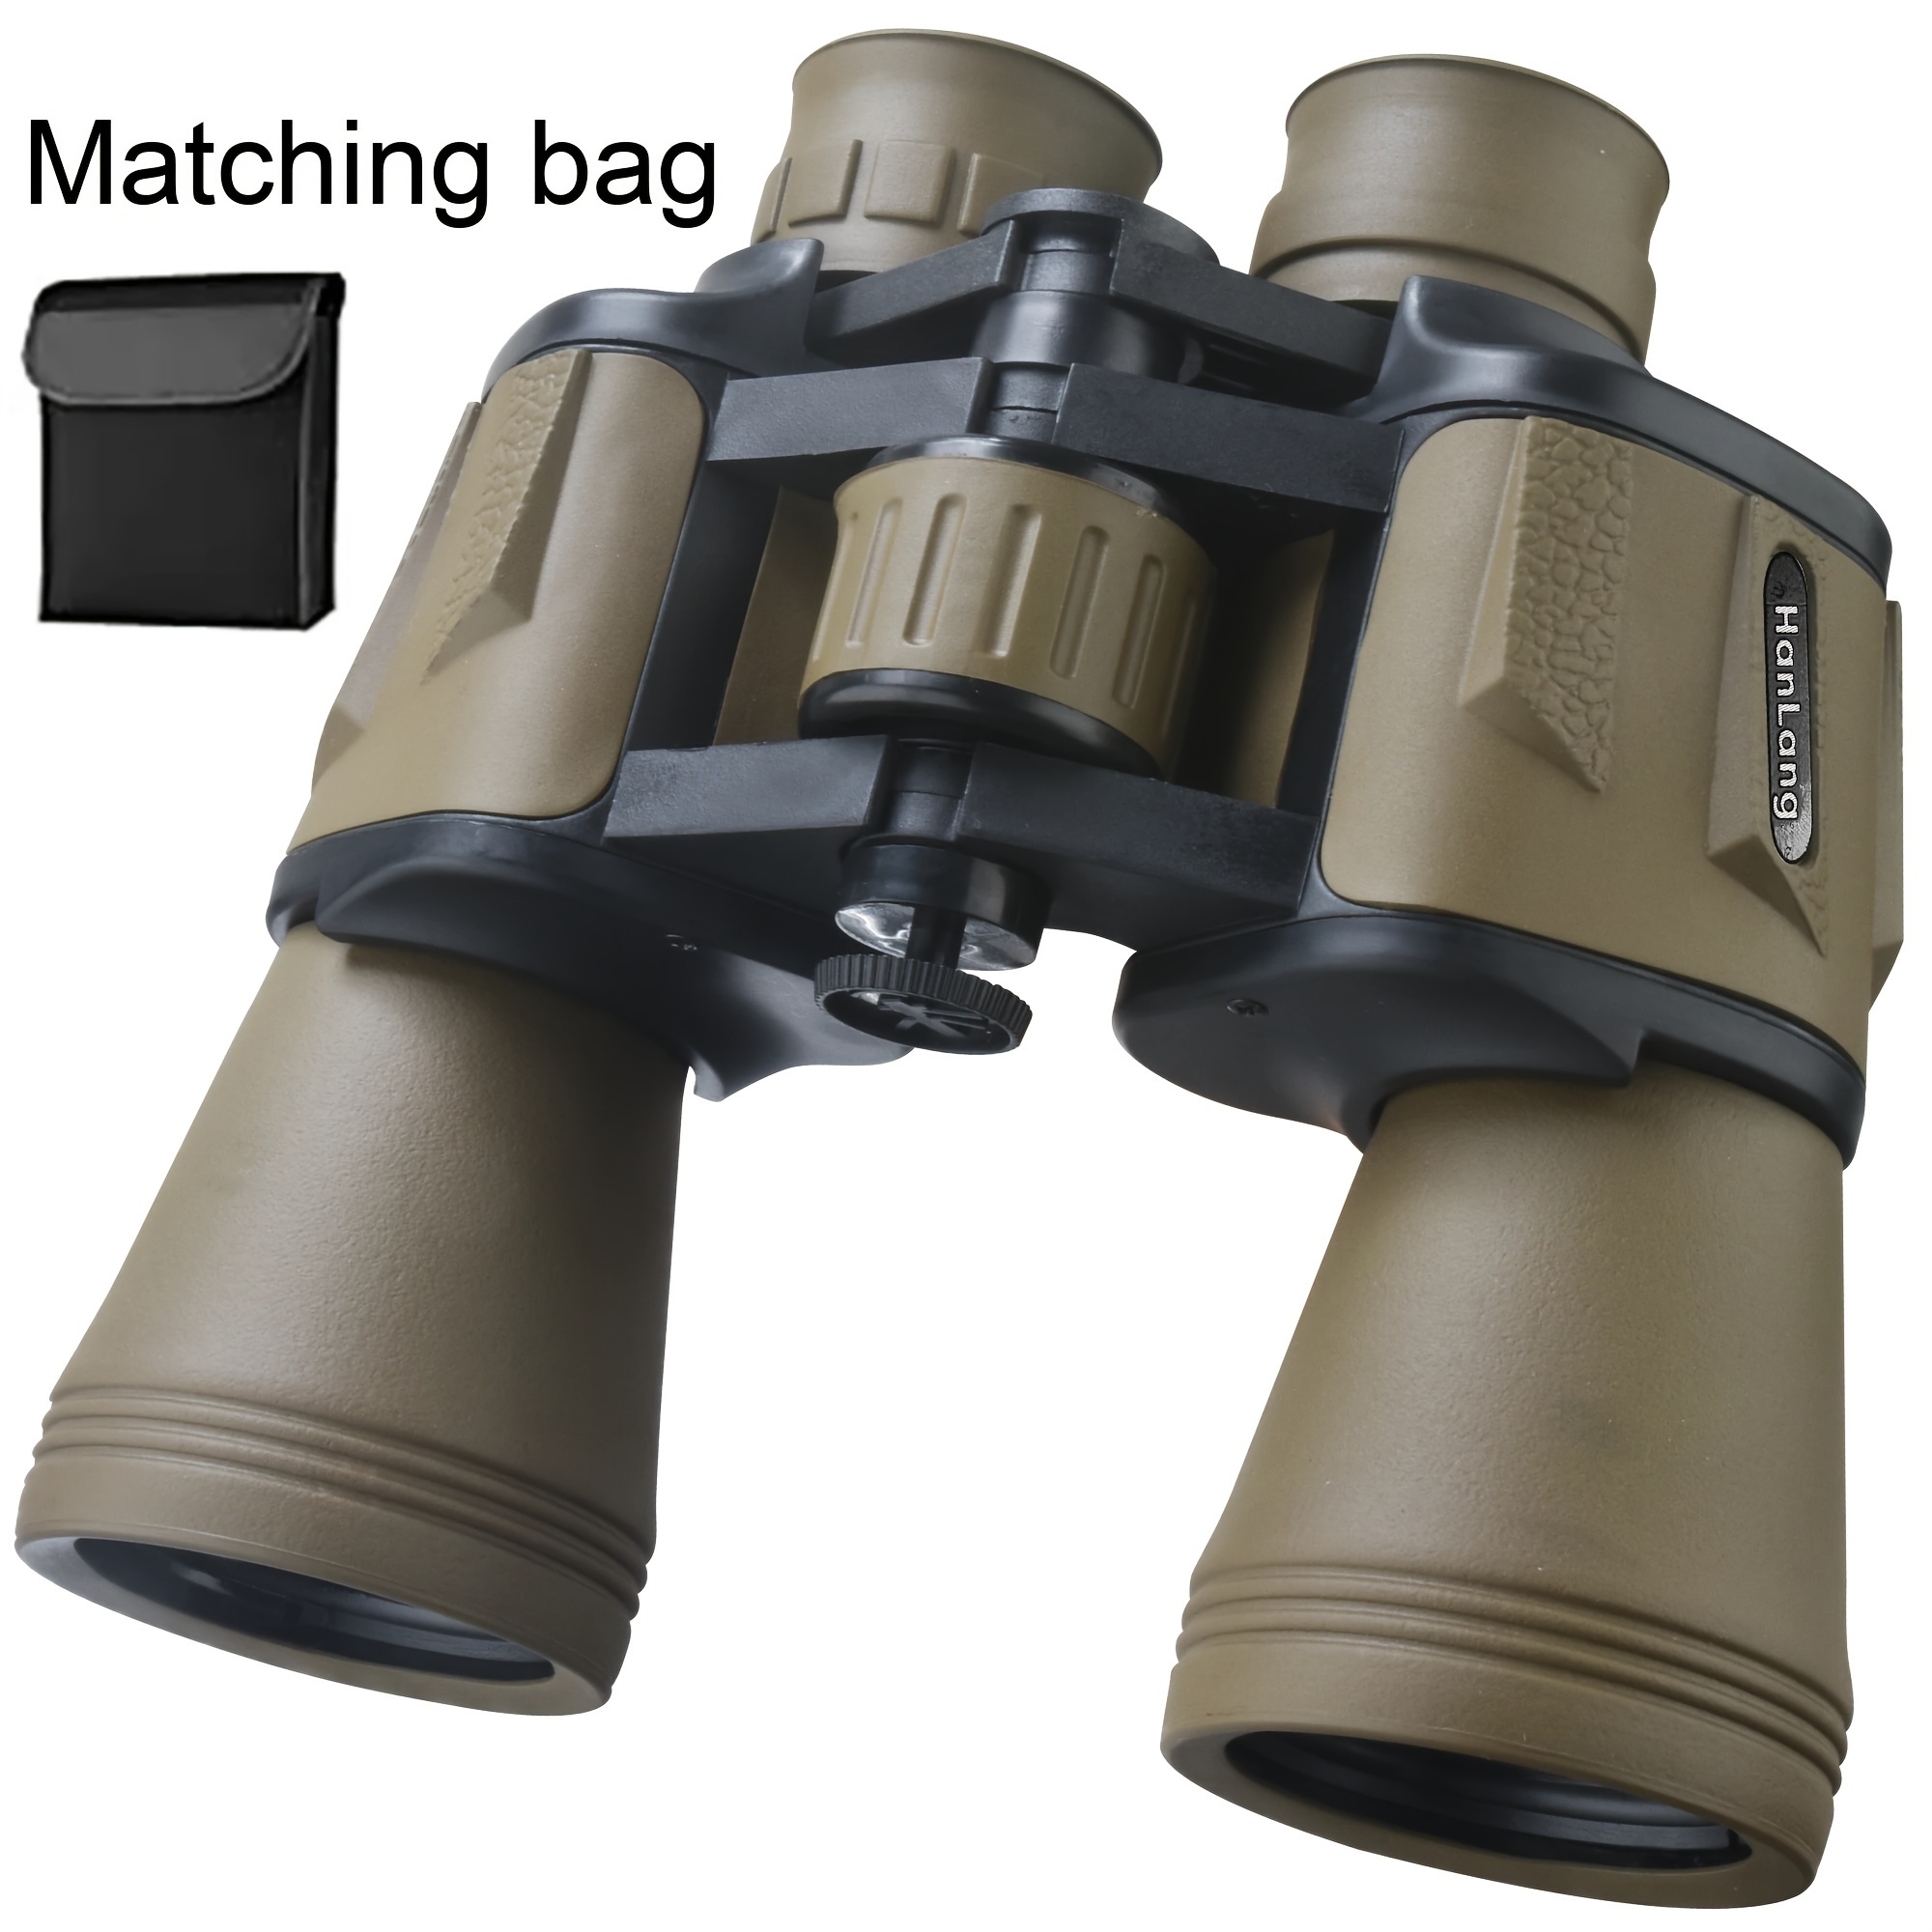 40x22 Hd Potente binoculares de largo alcance plegable Mini telescopio  óptico para la caza al aire libre -t